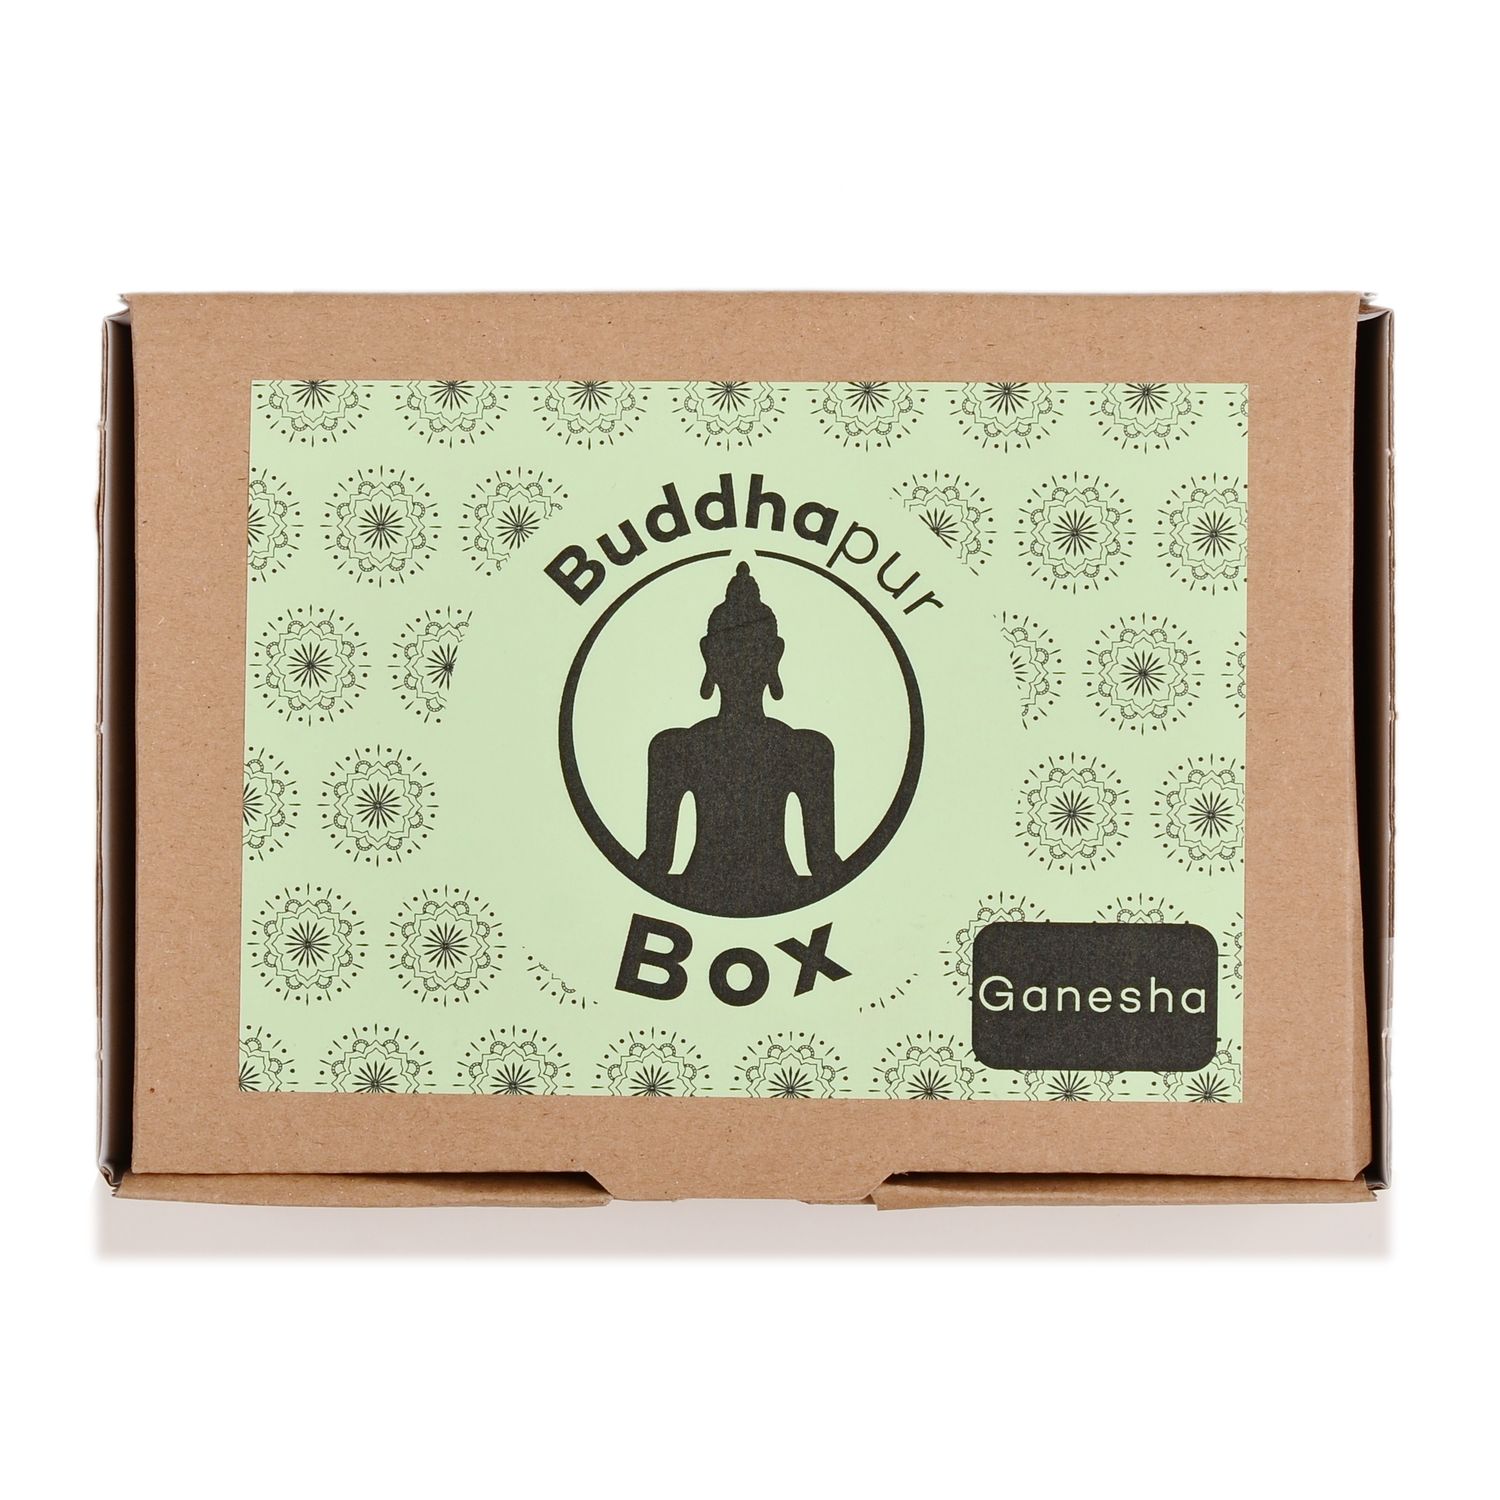 Buddhpur Box Ganesha: Verpackung